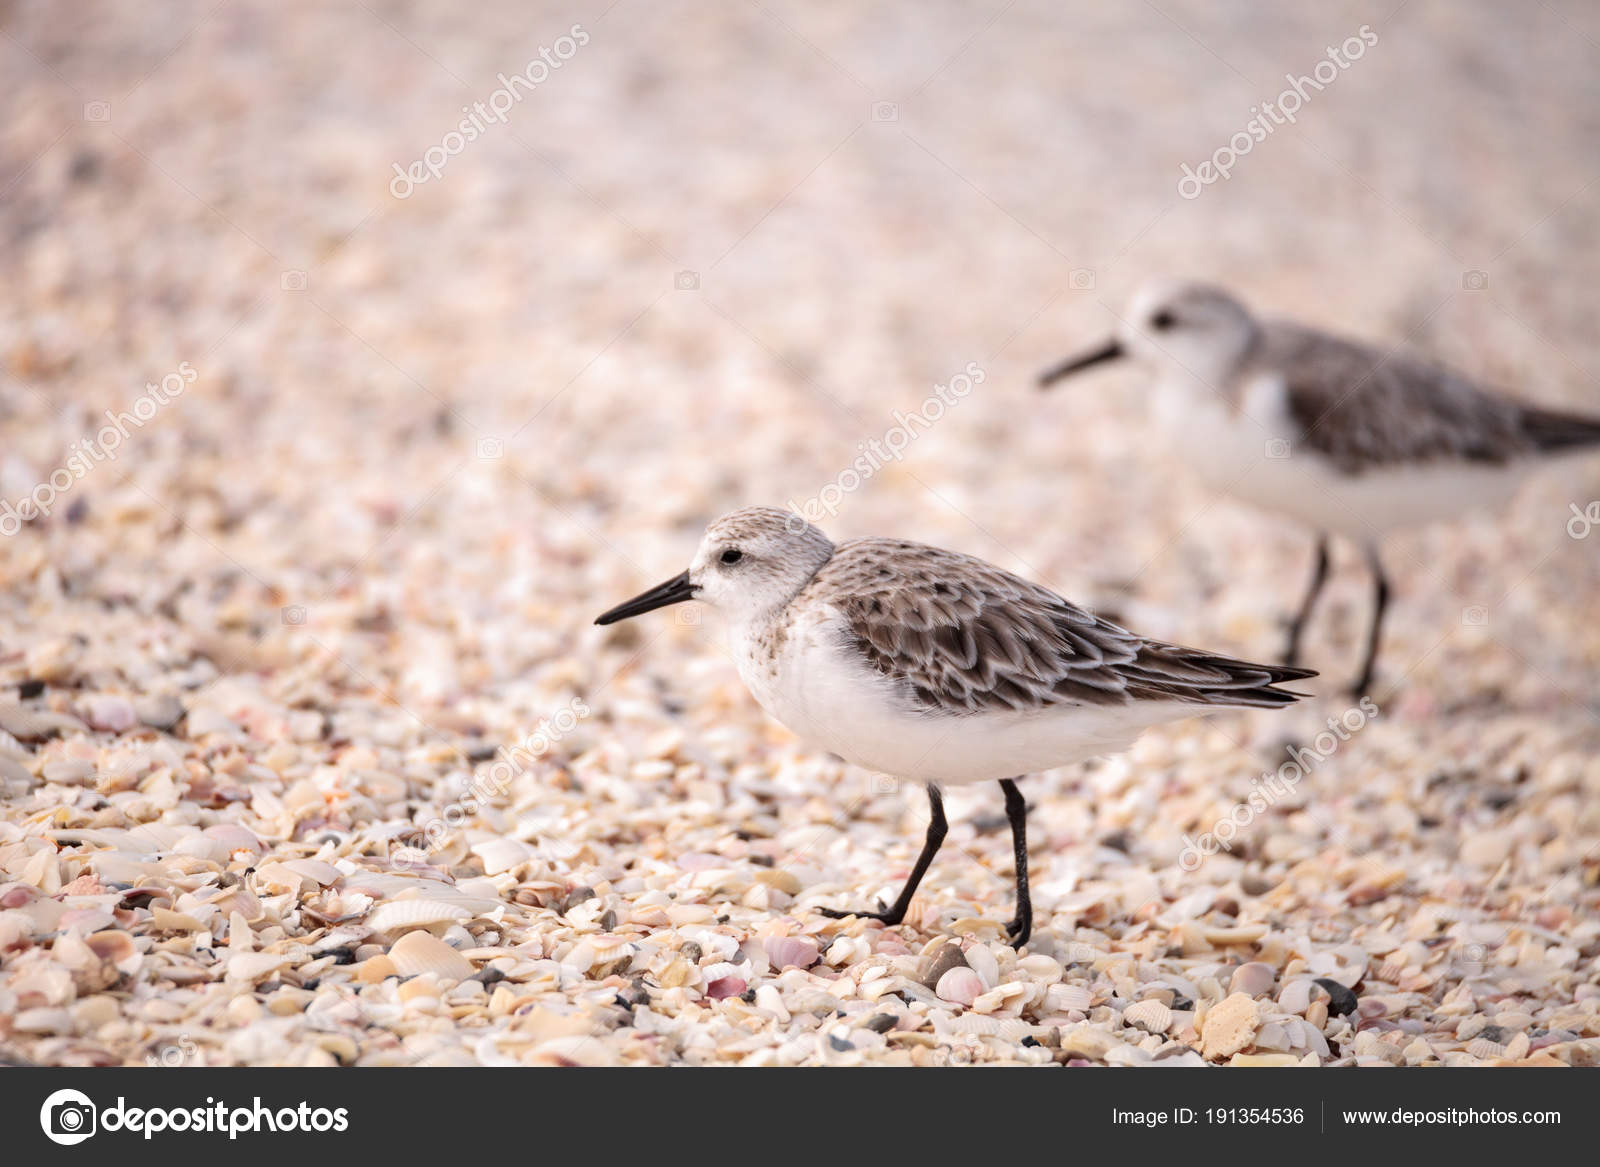 depositphotos_191354536-stock-photo-western-sandpiper-shorebirds-calidris-mauri.jpg